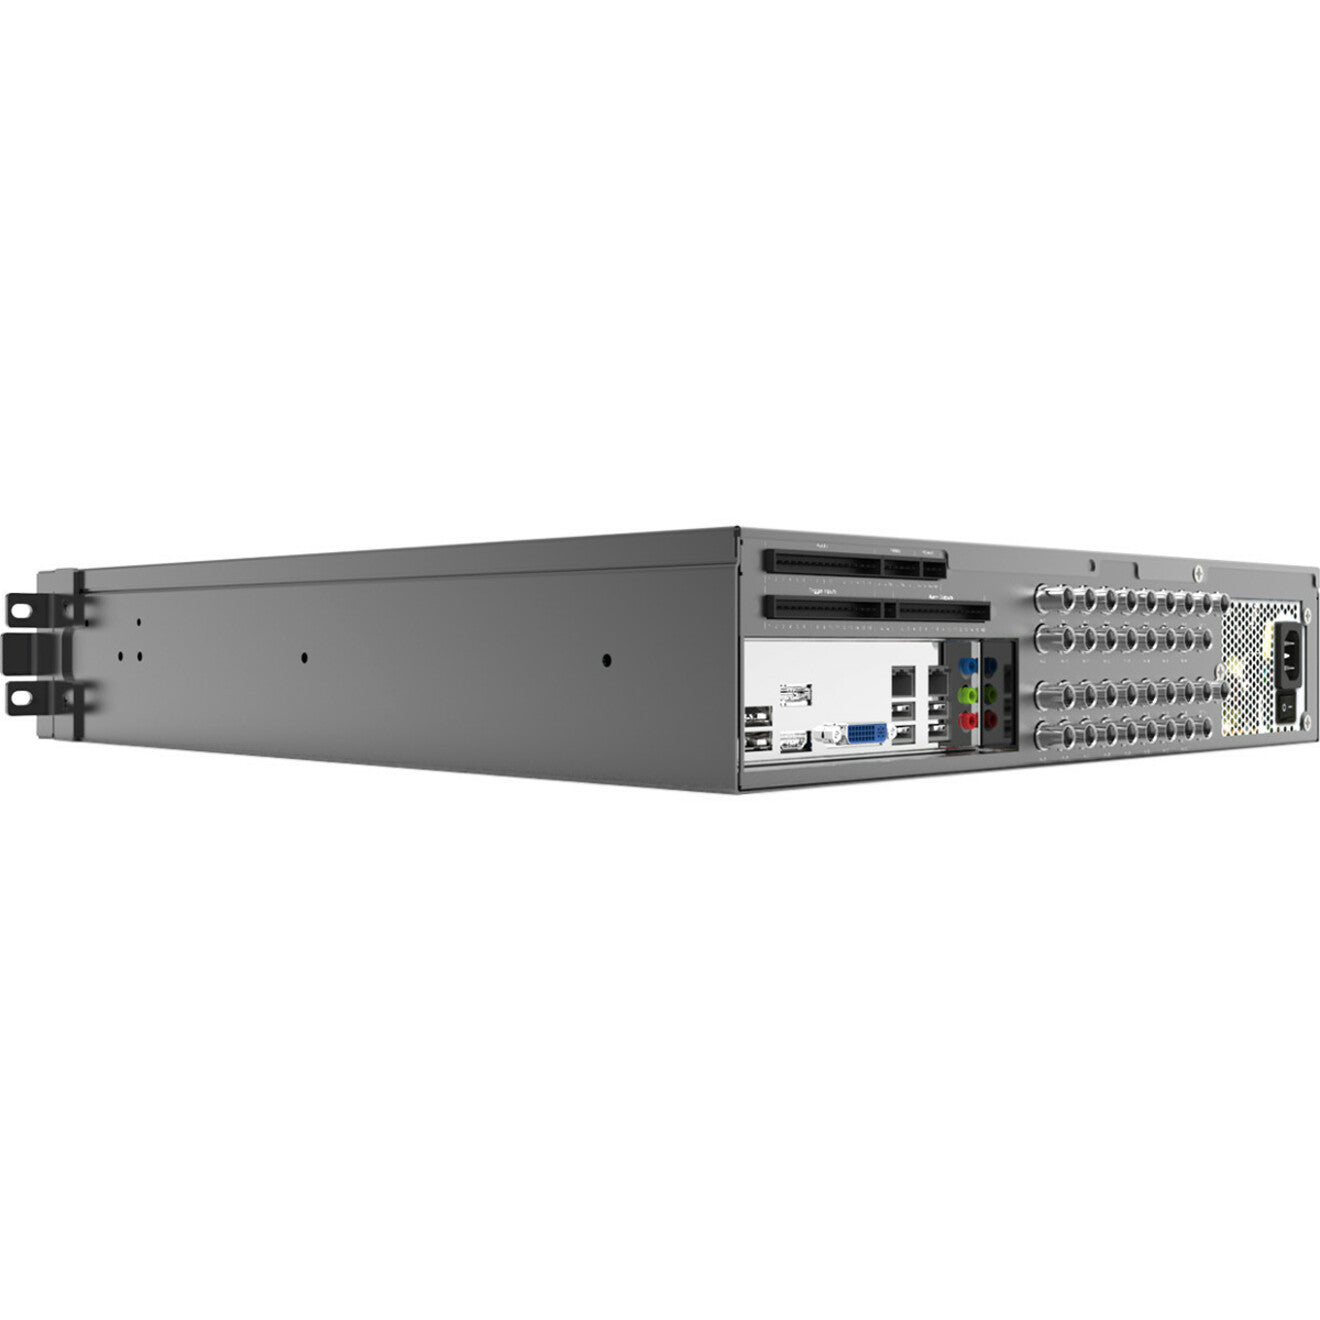 Exacq exacqVision Z Network Surveillance Server - 12 TB HDD